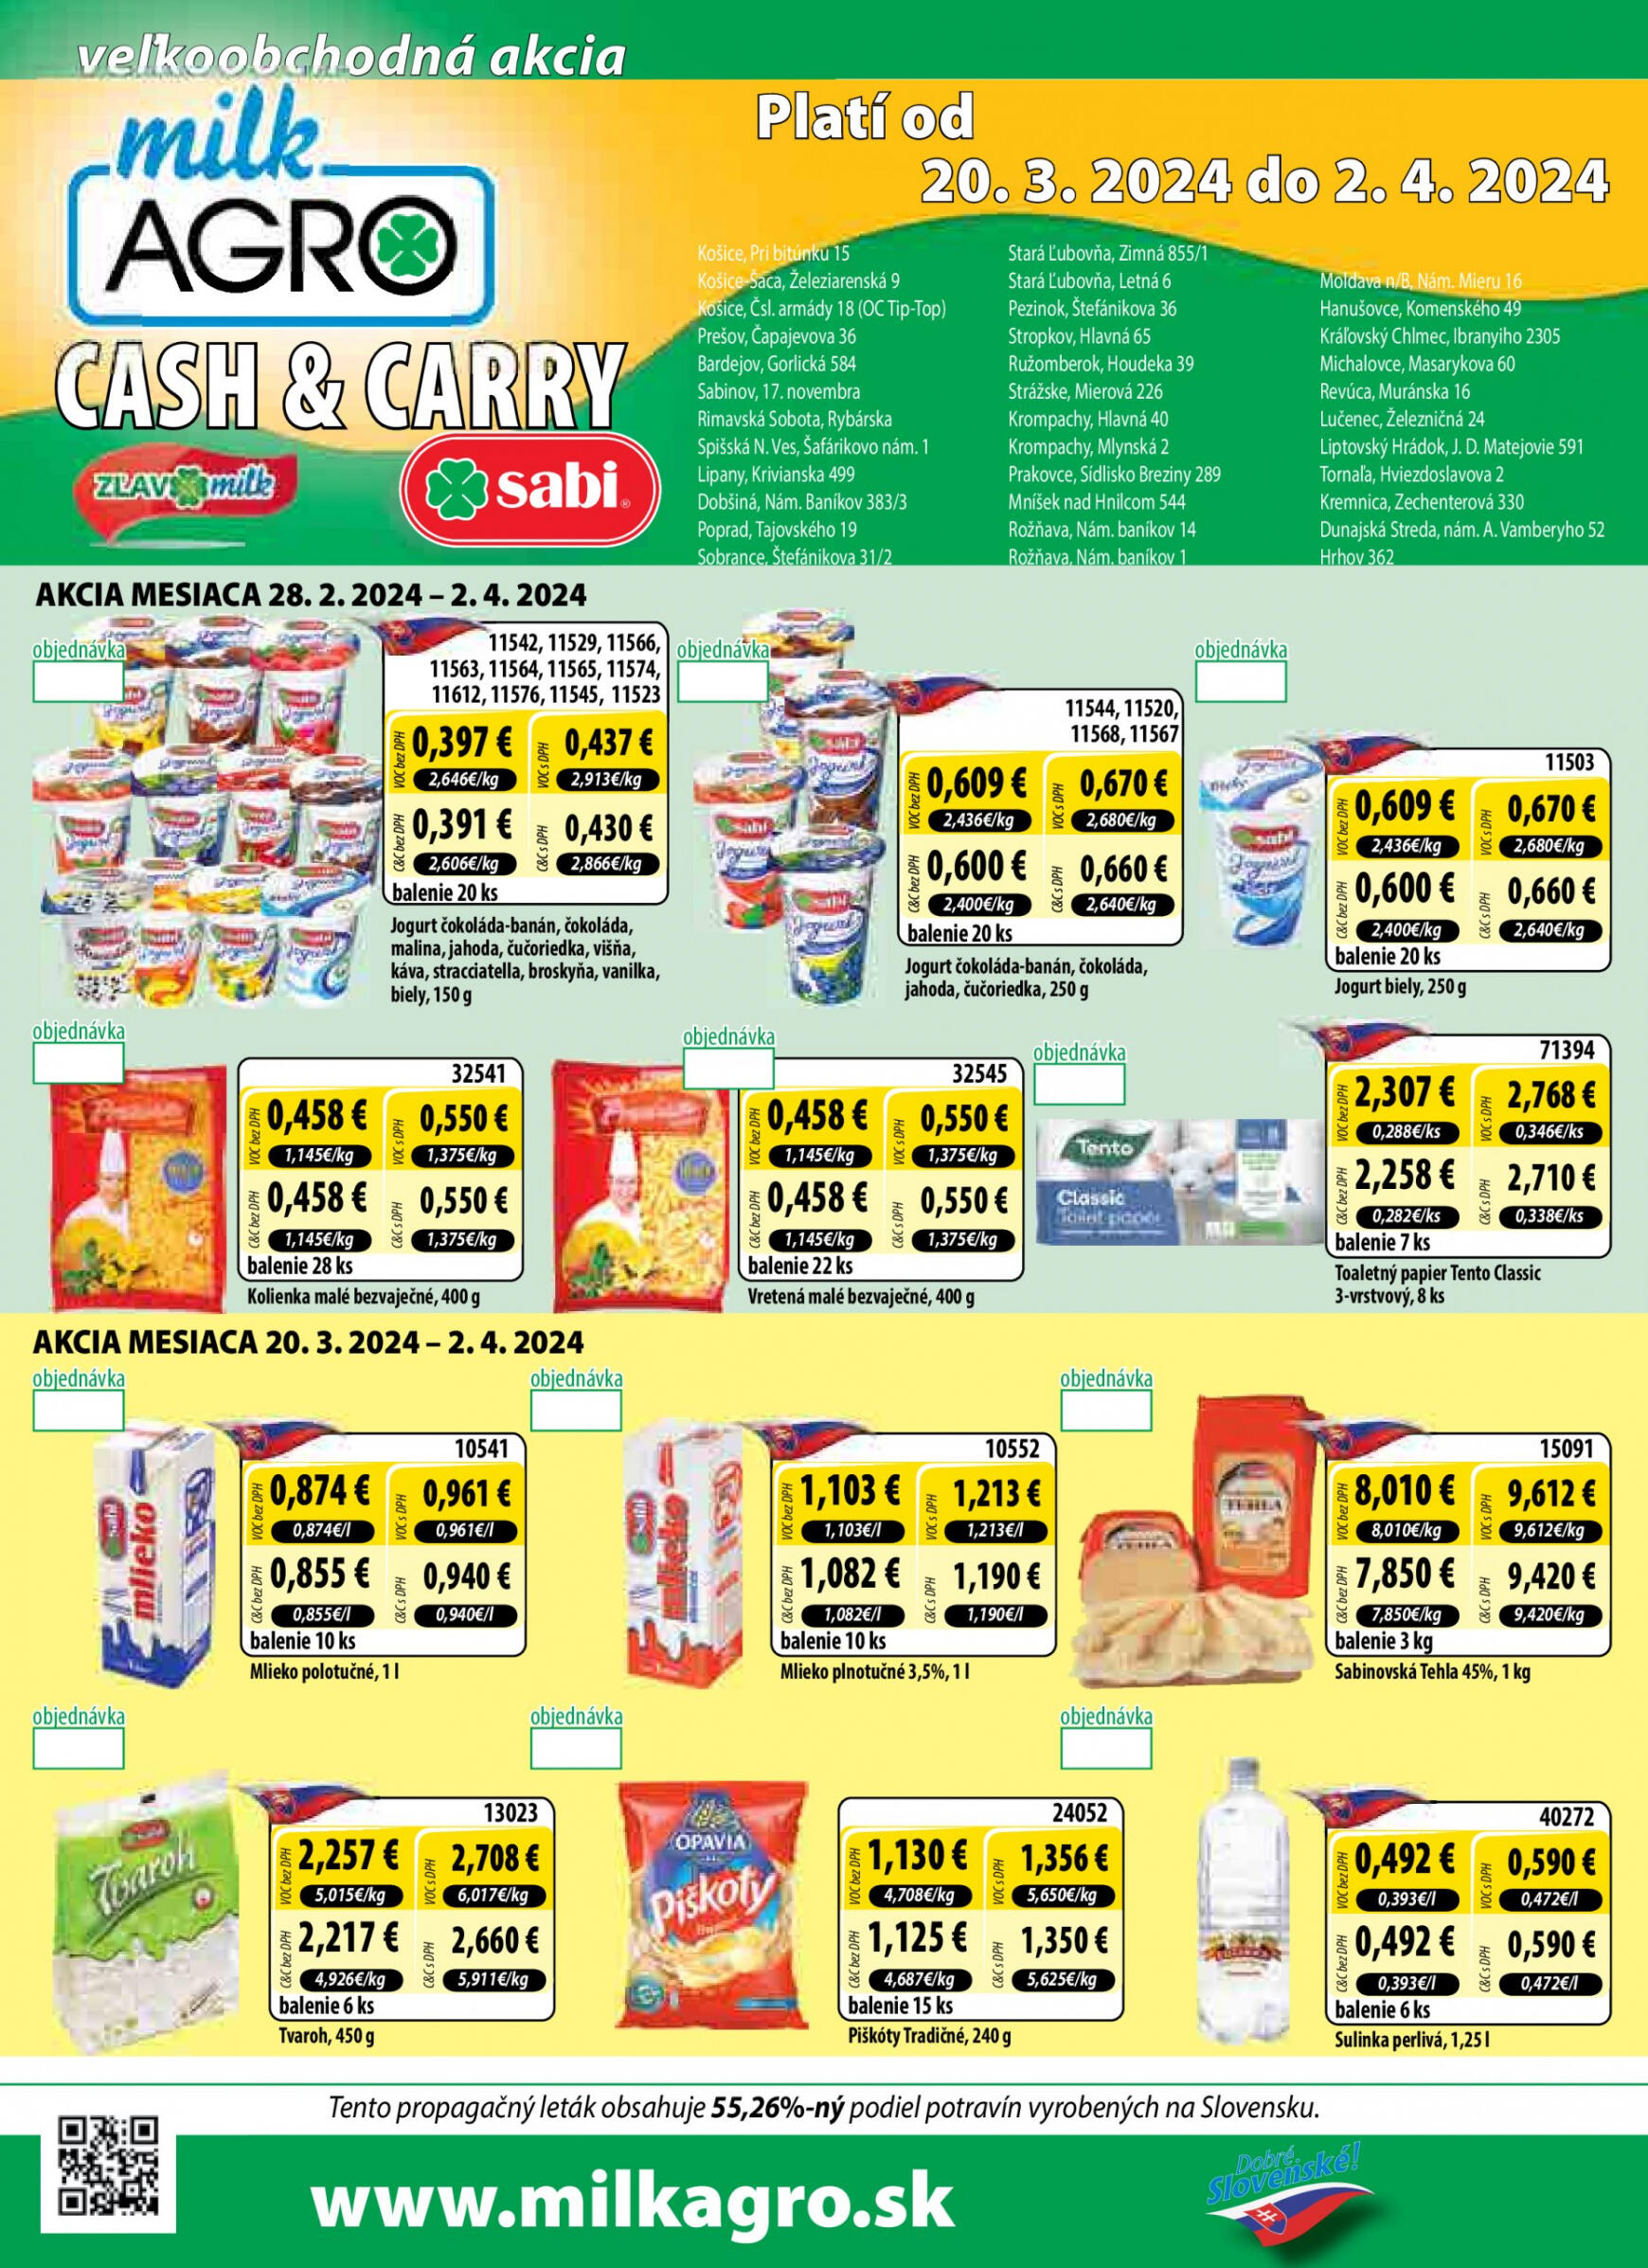 milk-agro - Milk Agro - Cash & Carry platný od 20.03.2024